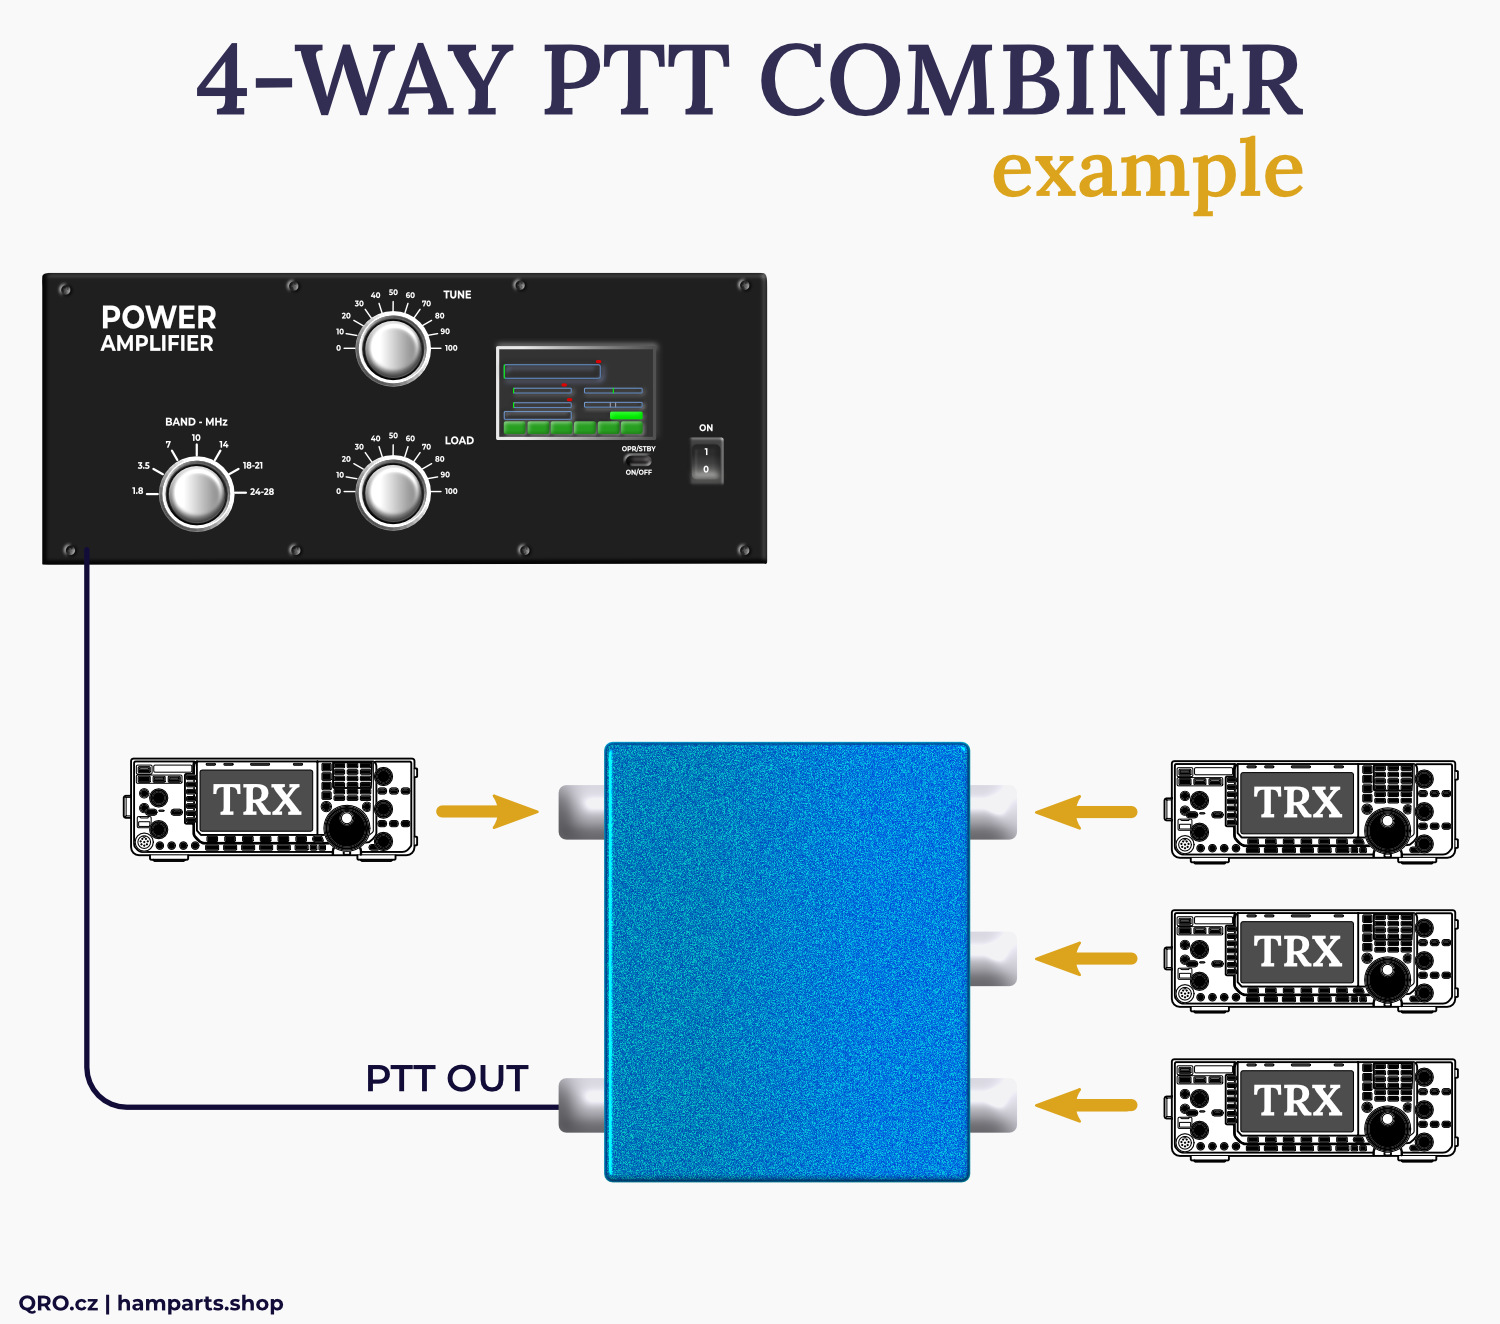 4-way ptt combiner by qro.cz hamparts.shop